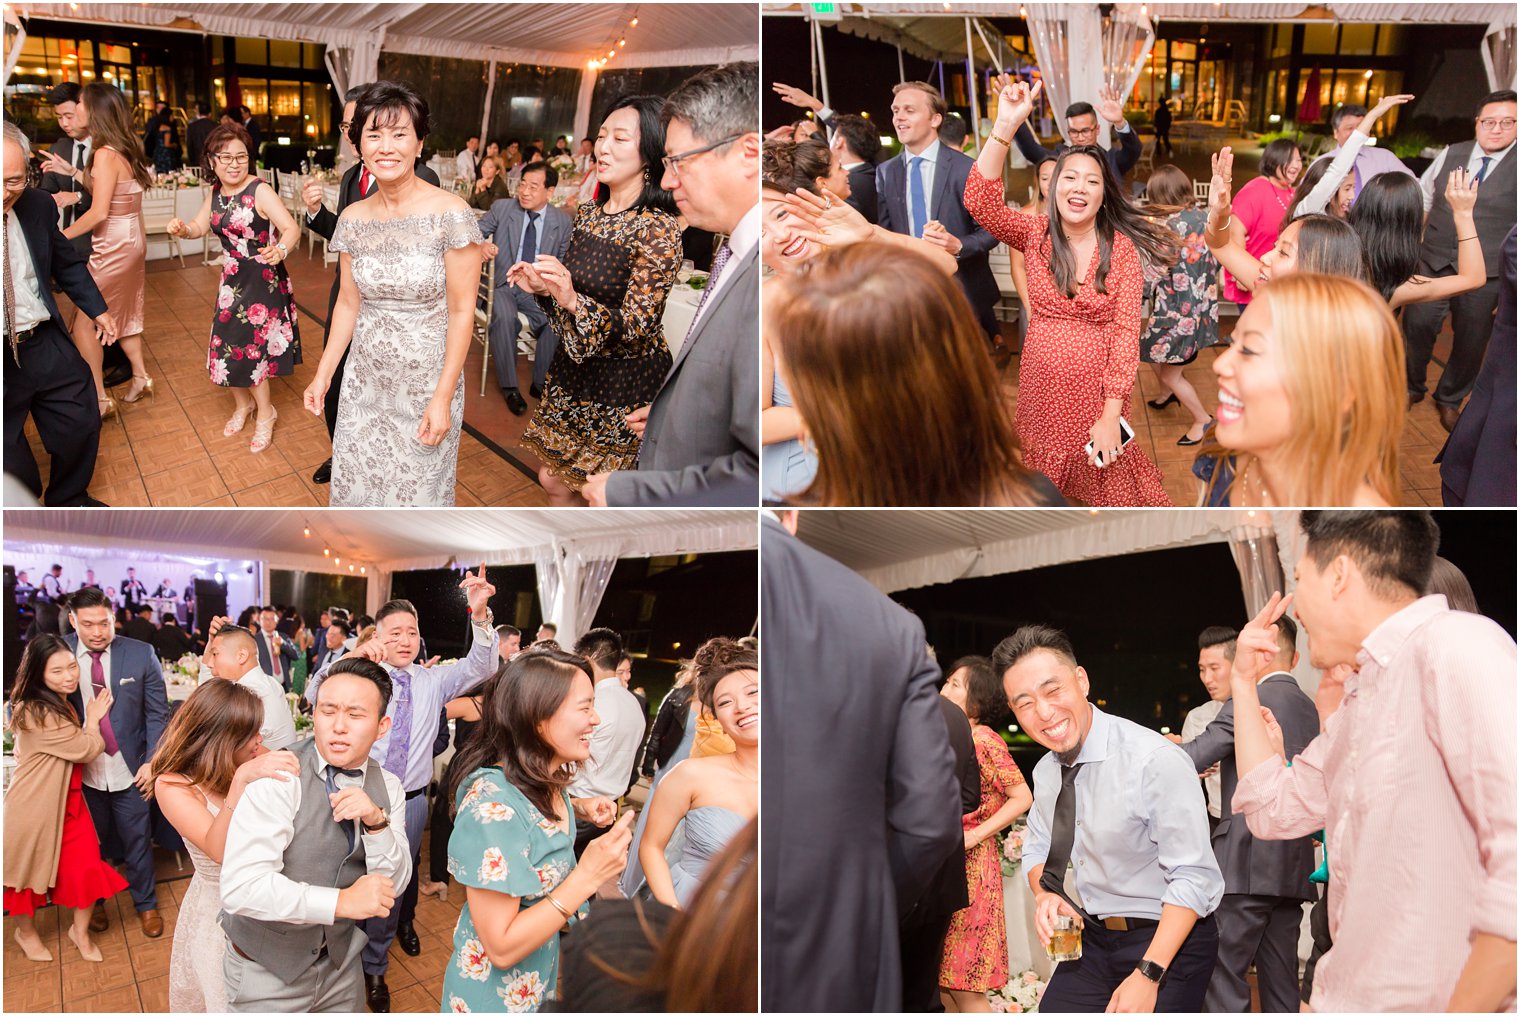 Idalia Photography captures reception dancing at Chauncey Hotel